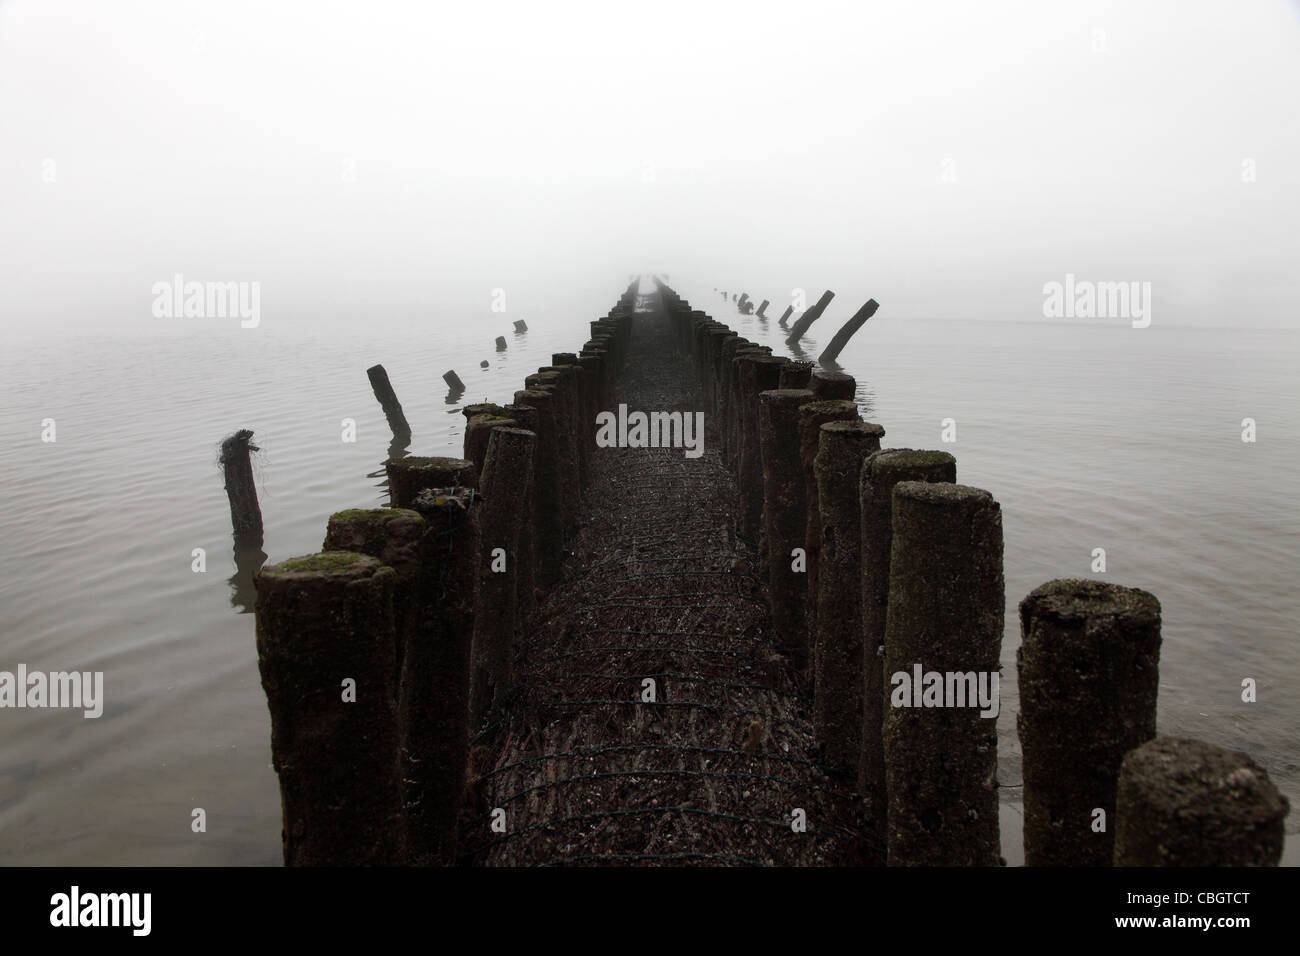 Marea baja una espesa niebla, rompeolas, en la orilla del mar del Norte de la isla East-Frisian Spiekeroog, Baja Sajonia, Alemania, Europa. Foto de stock